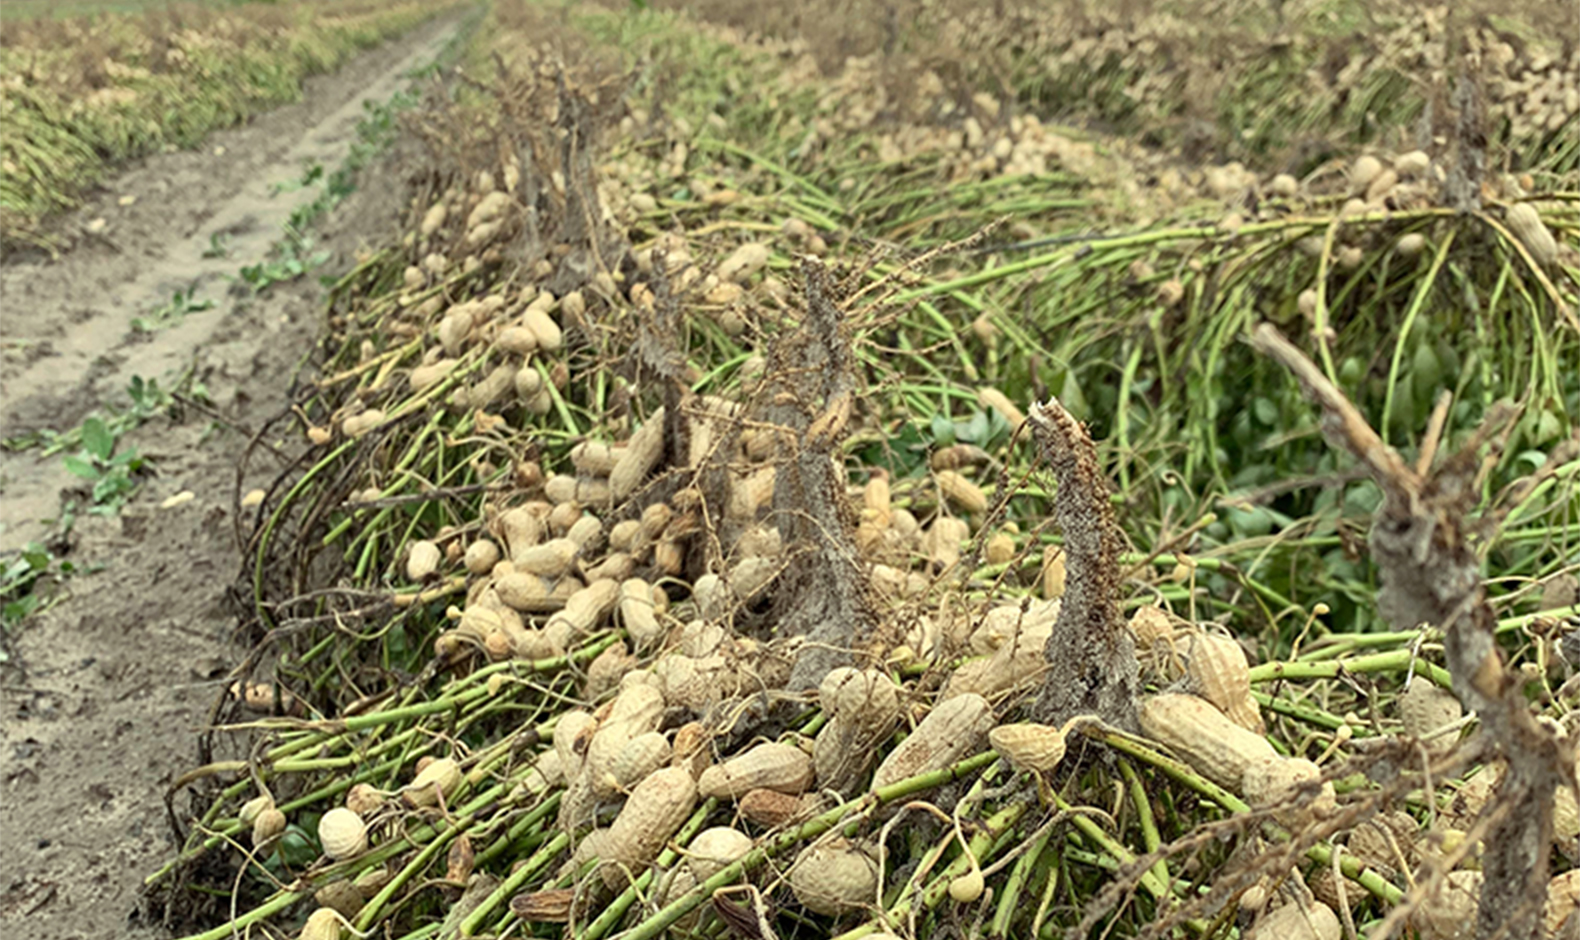 Peanuts in the field